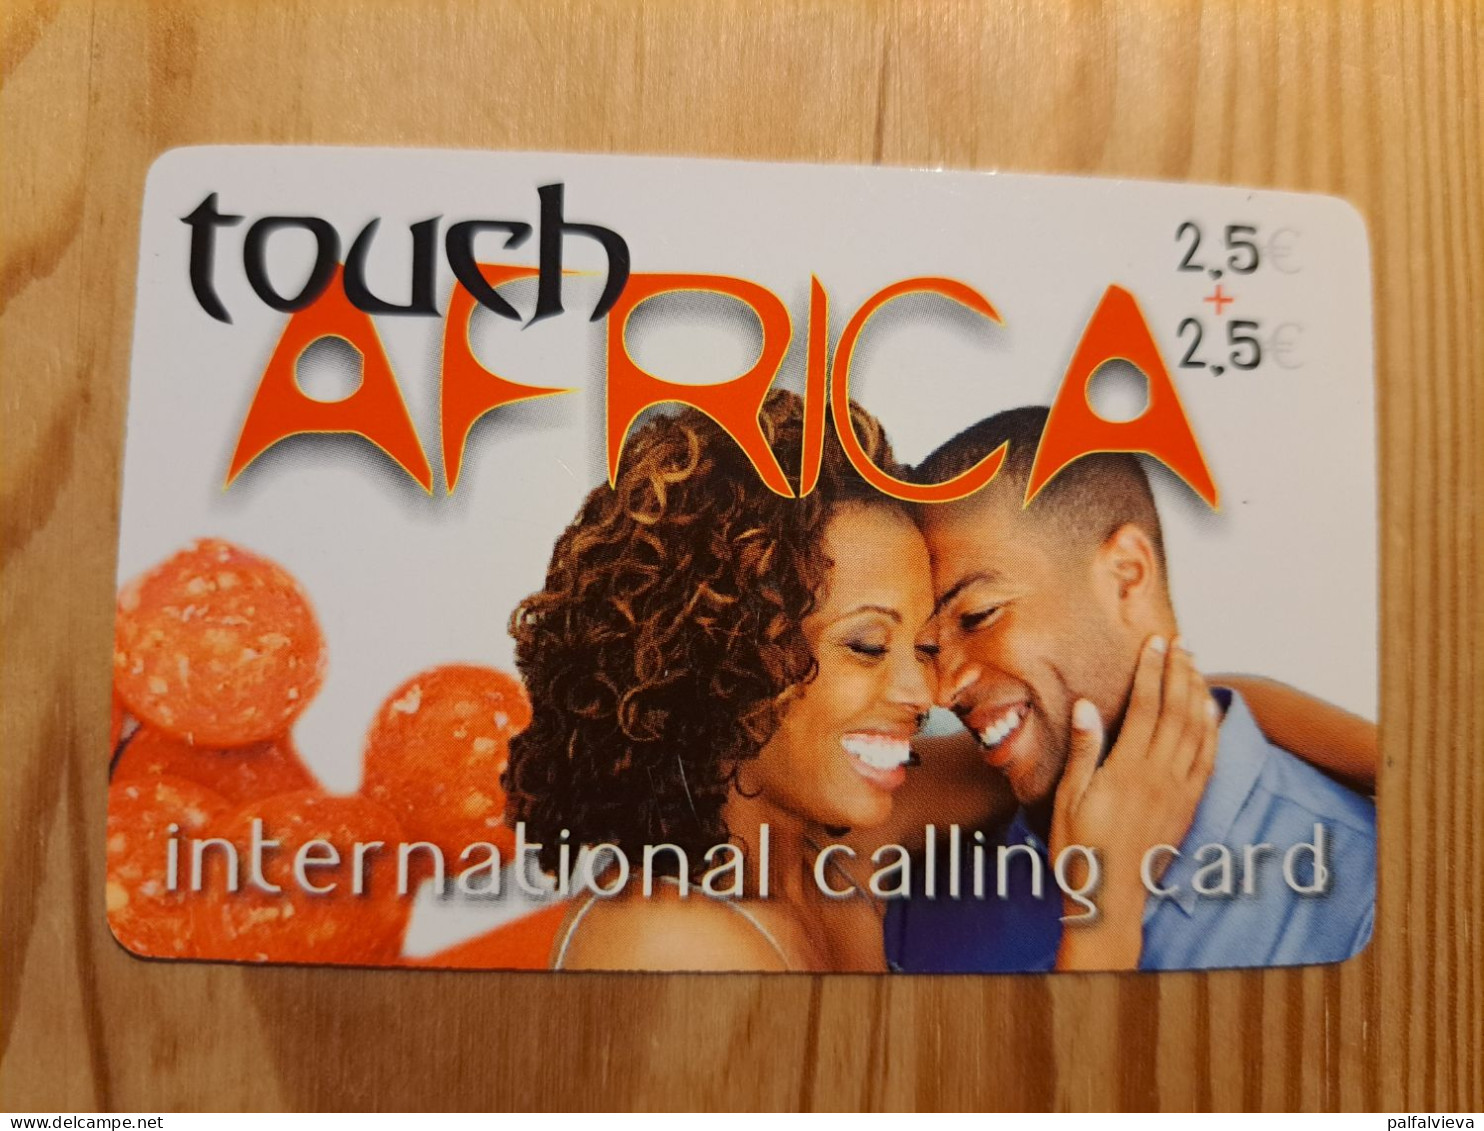 Prepaid Phonecard Germany, Touch Africa - Woman - GSM, Voorafbetaald & Herlaadbare Kaarten